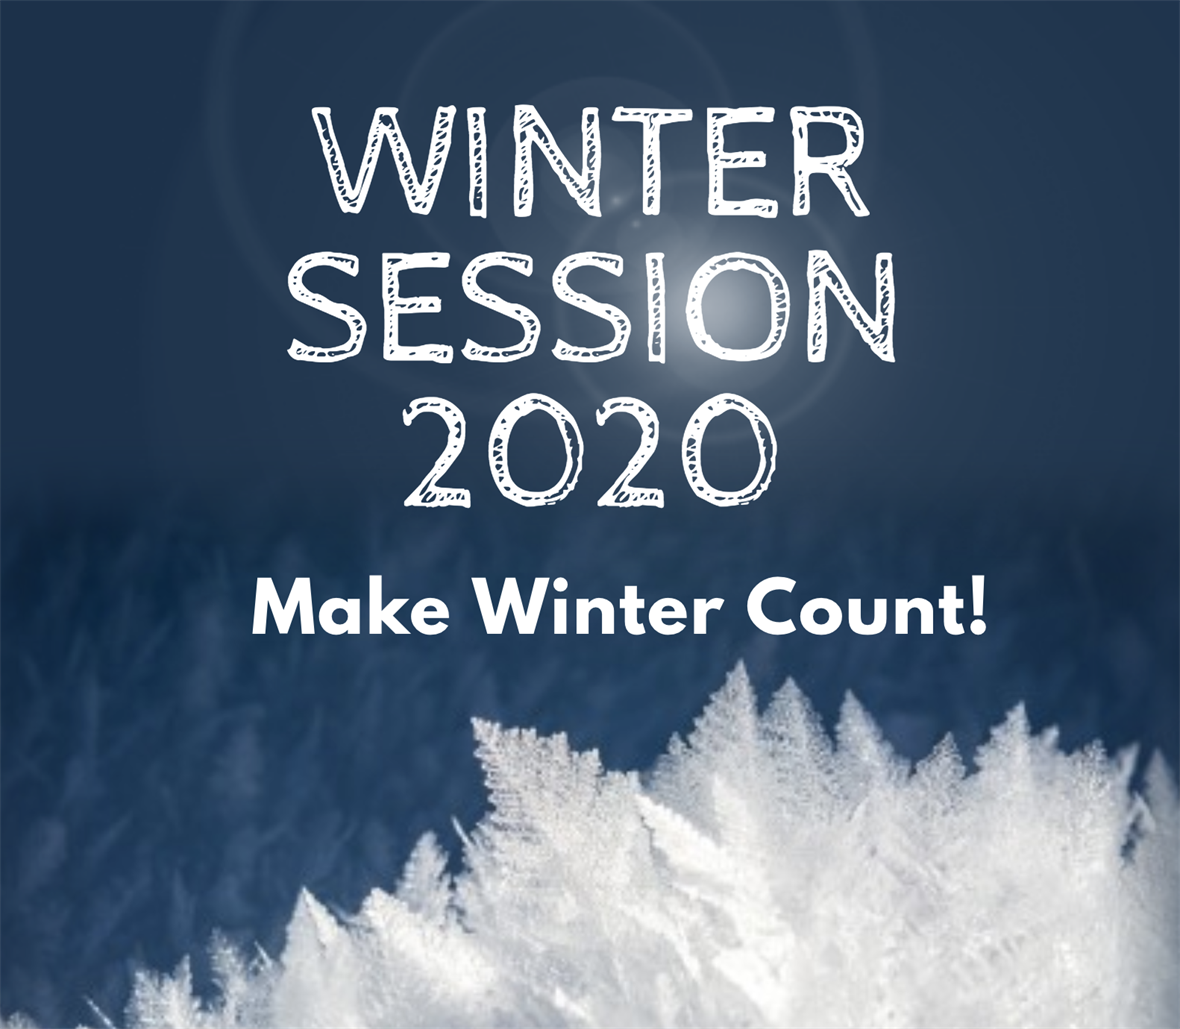 Winter session 2020 - make winter count